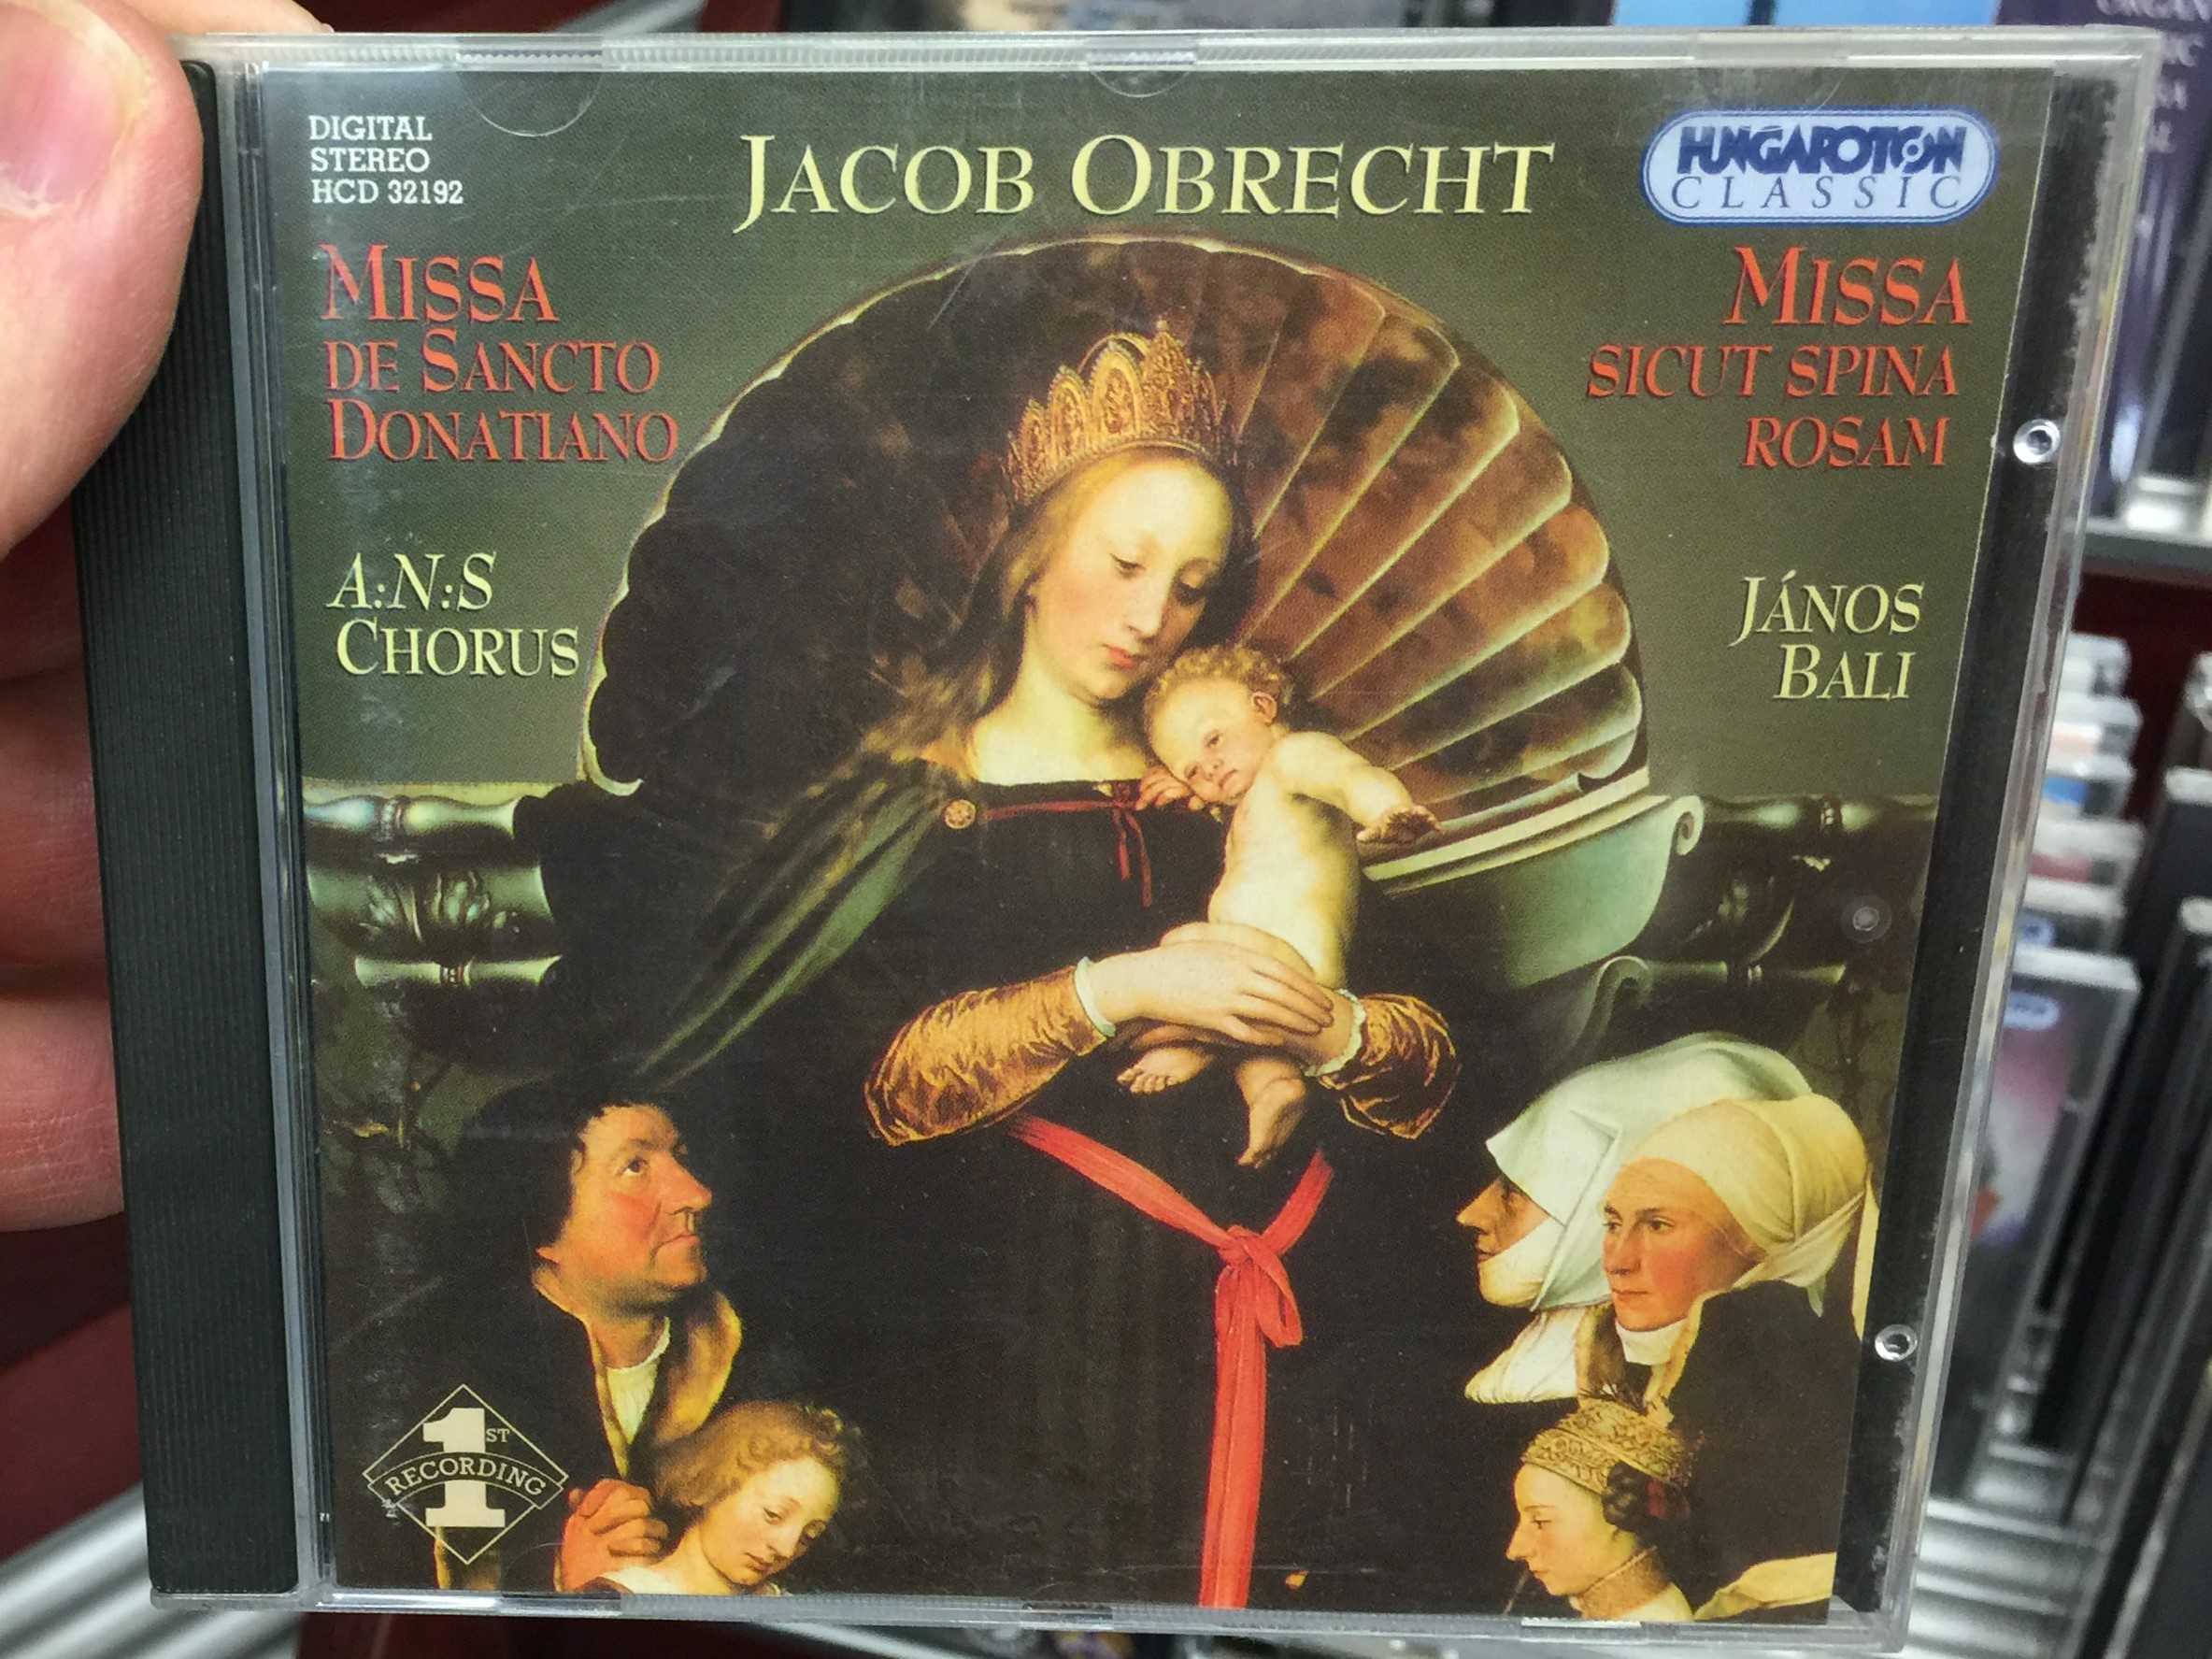 jacob-obrecht-missa-de-sancto-donatiano-missa-sicut-spina-rosam-ans-chorus-j-nos-bali-hungaroton-classic-audio-cd-2003-stereo-hcd-32192-1-.jpg